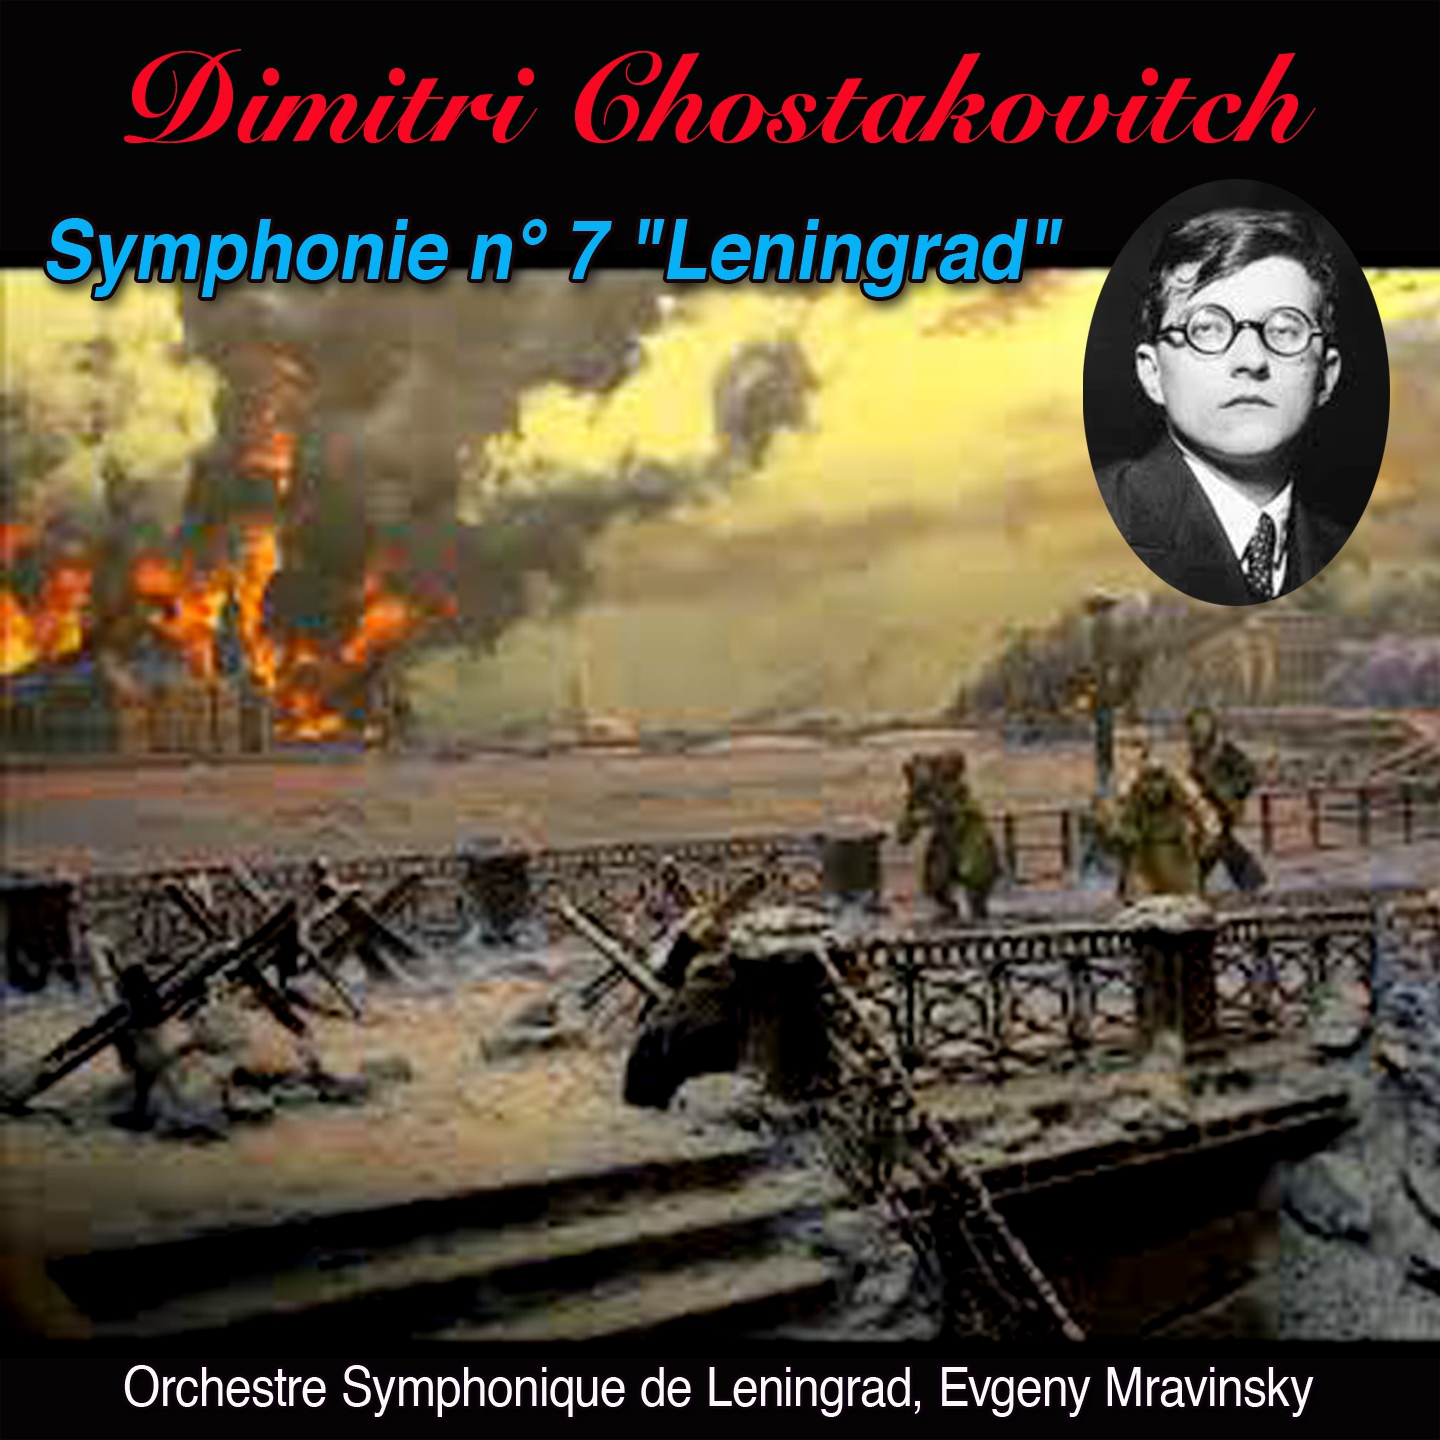 Leningrad moderato Symphonie n 7 op. 60 en ut majeur " Leningrad"